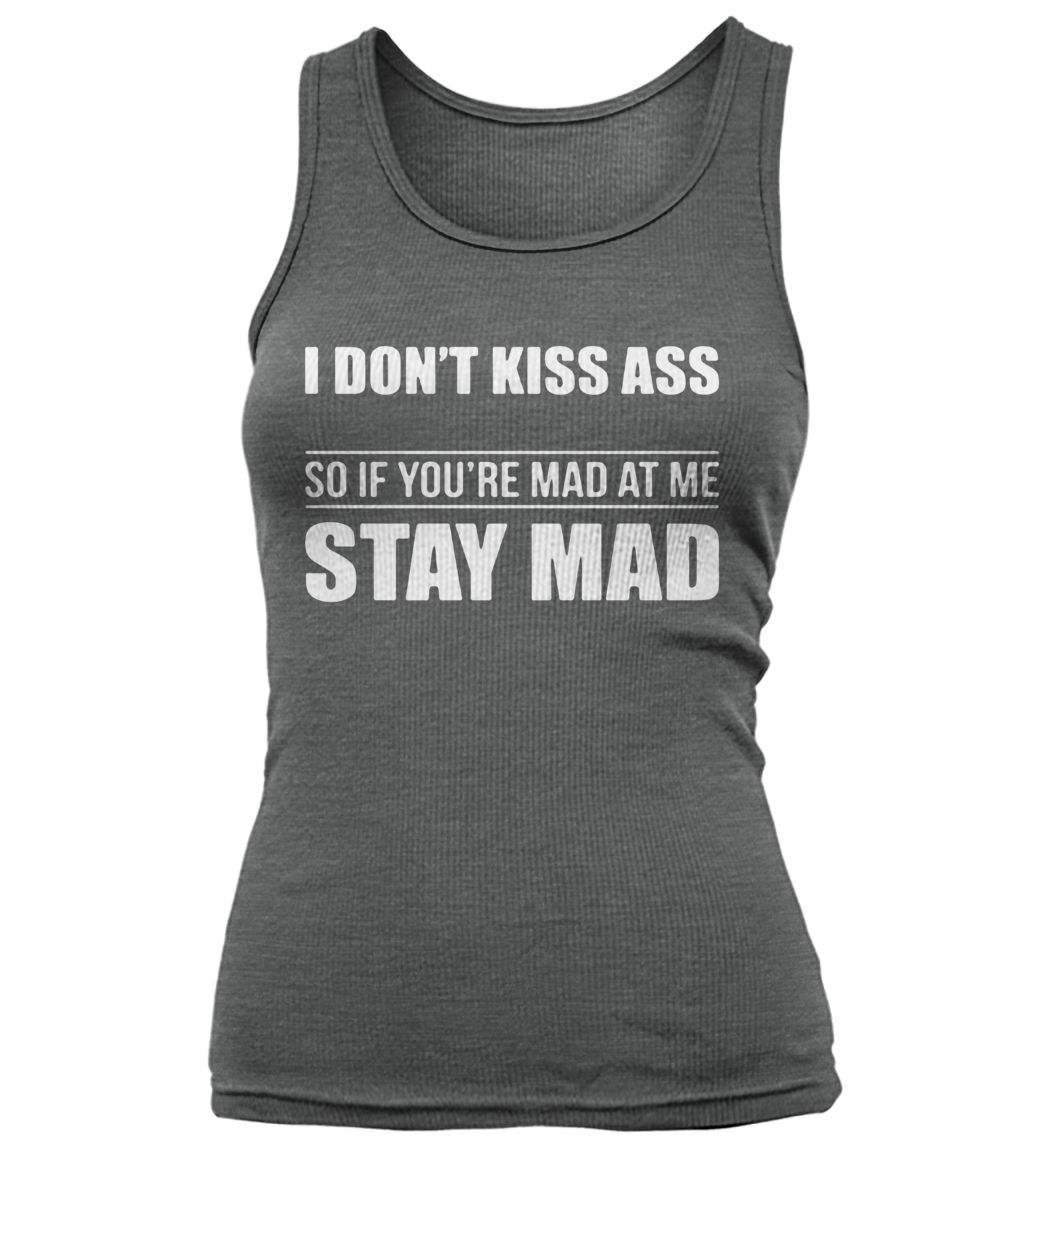 I don't kiss ass so if you're mad at me stay mad women's tank top